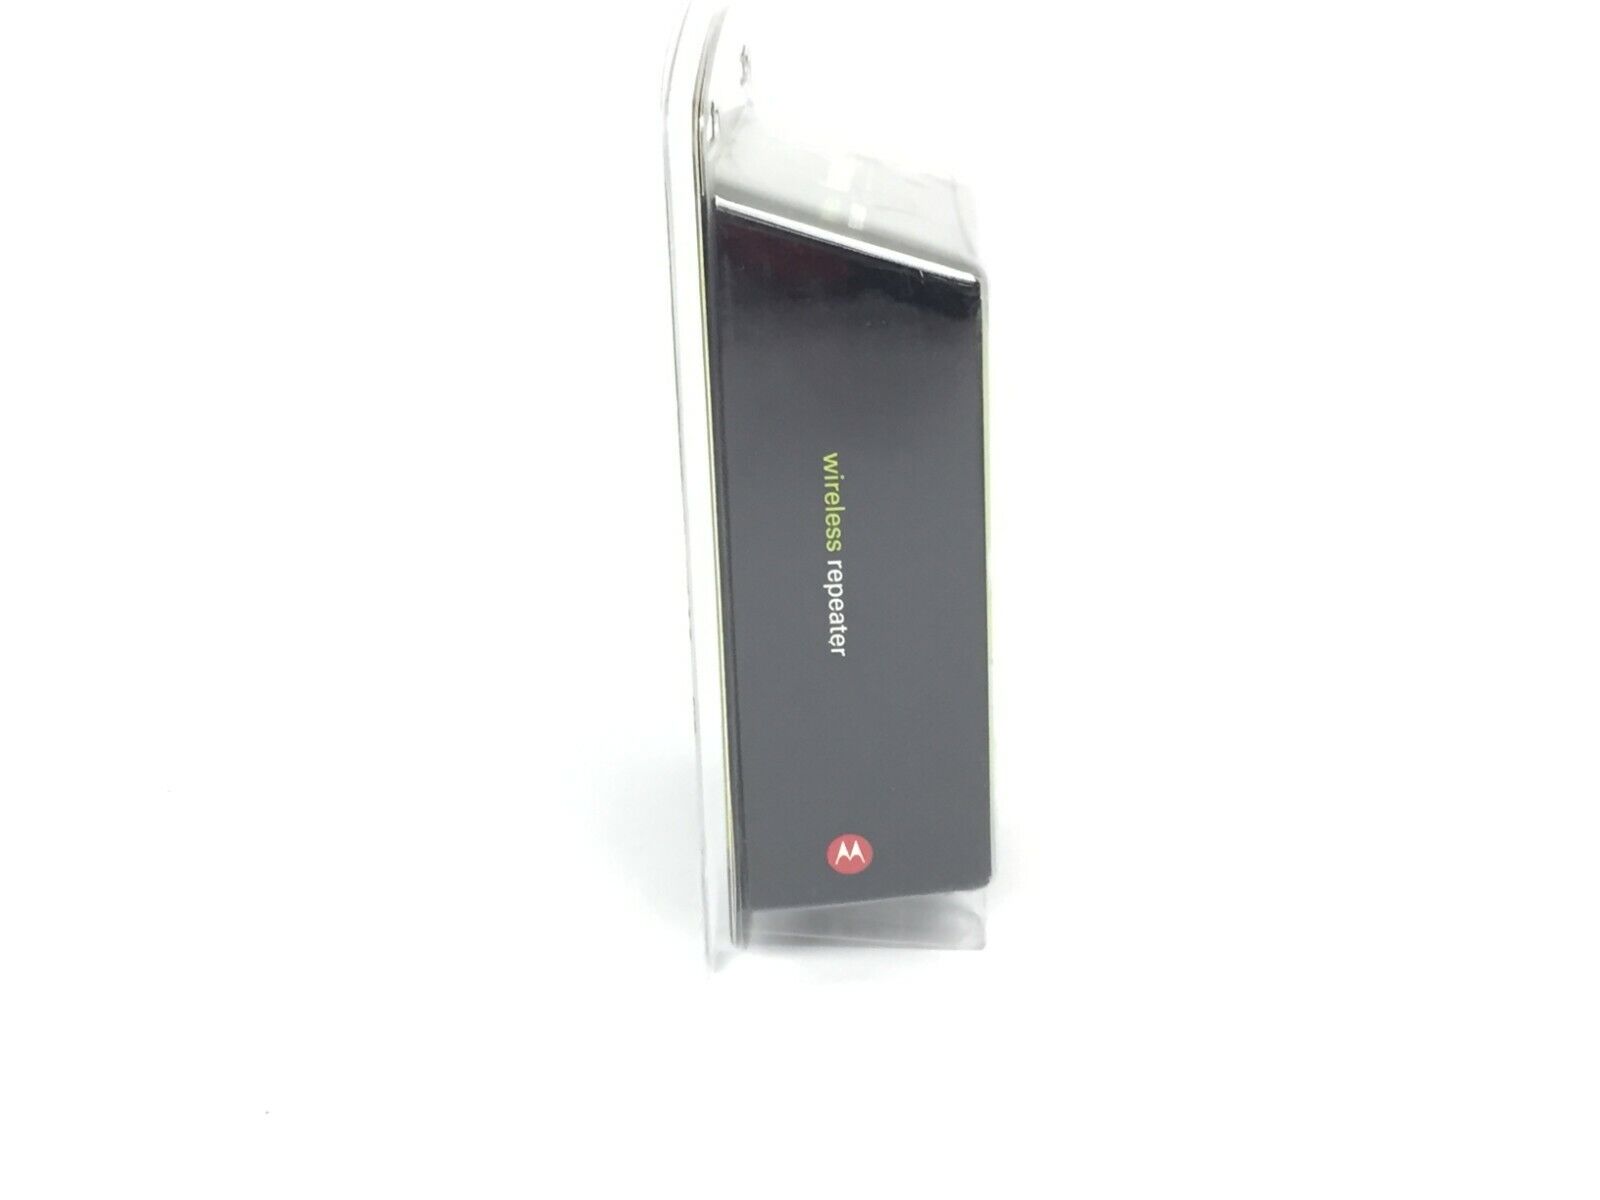 Motorola Homesight Wireless Signal Repeater HMAC9100